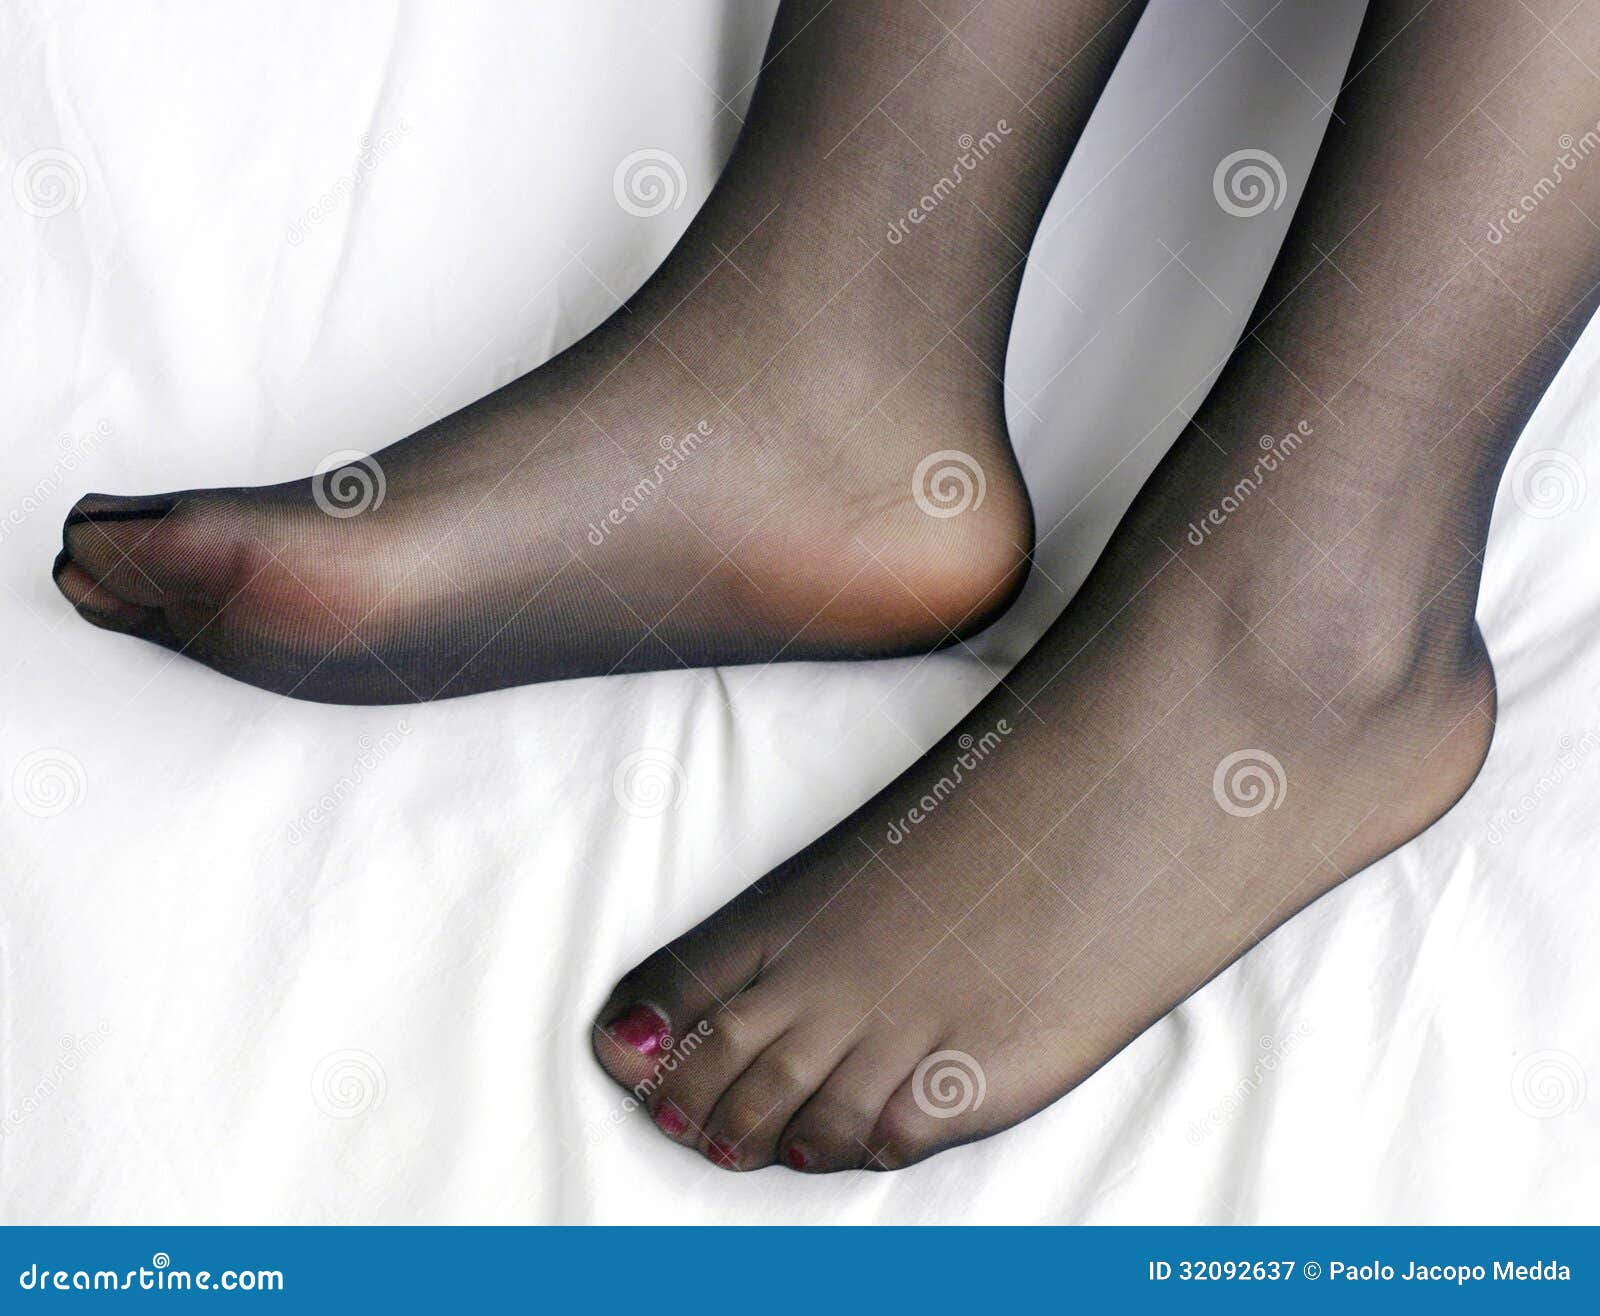 angela willemsen recommends nylon toe pics pic